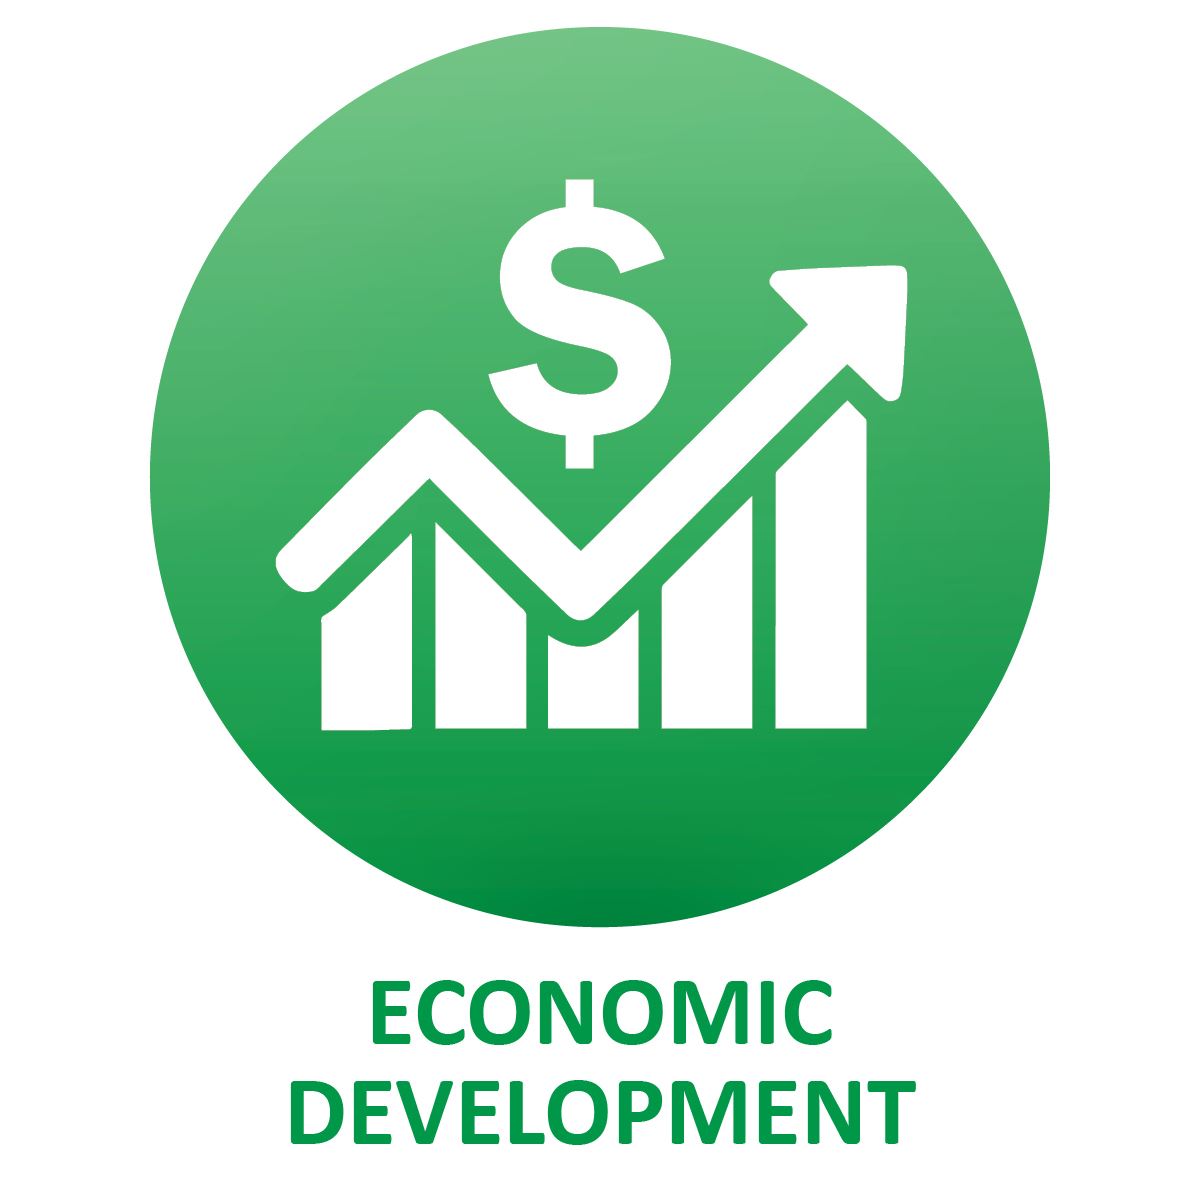 economic development in business plan